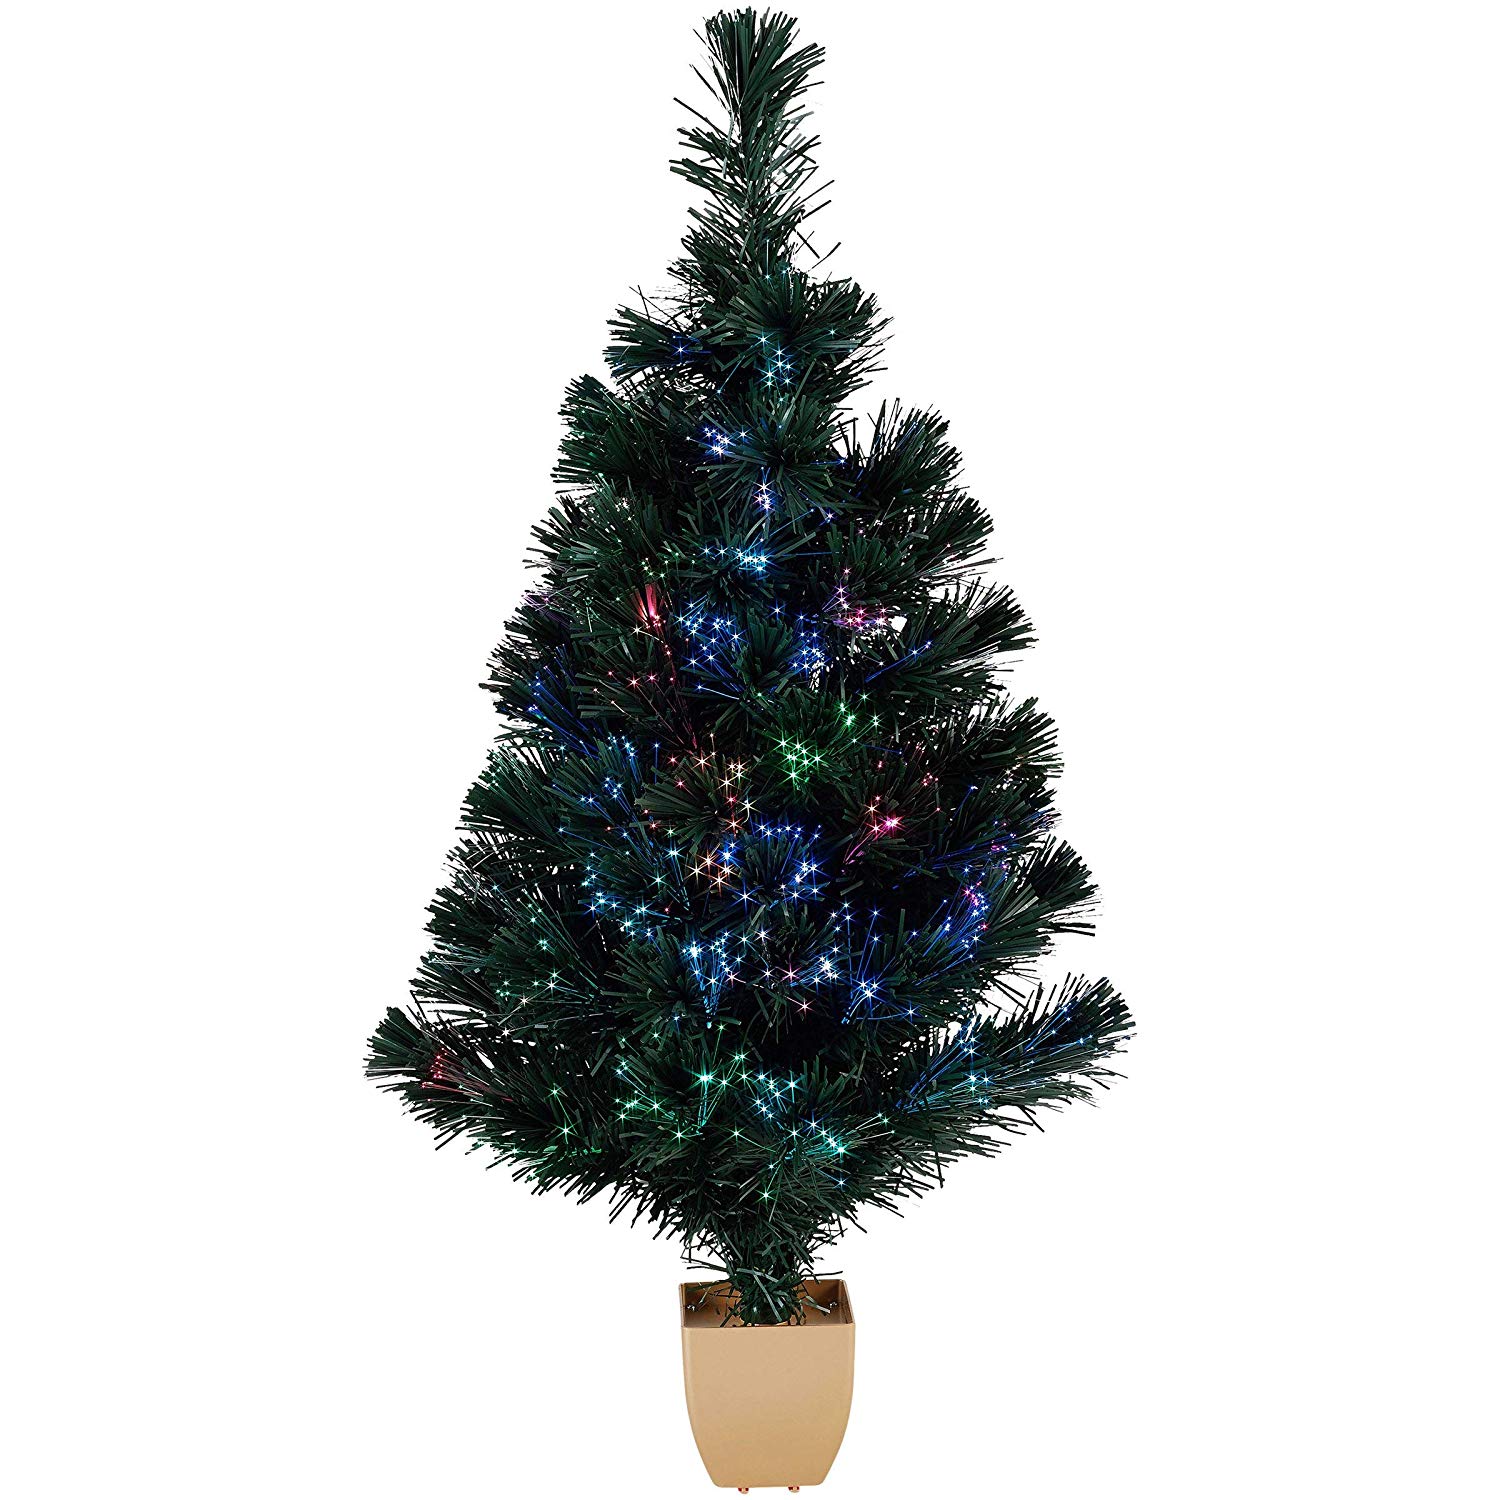 trim a home fiber optic magical christmas tree manual